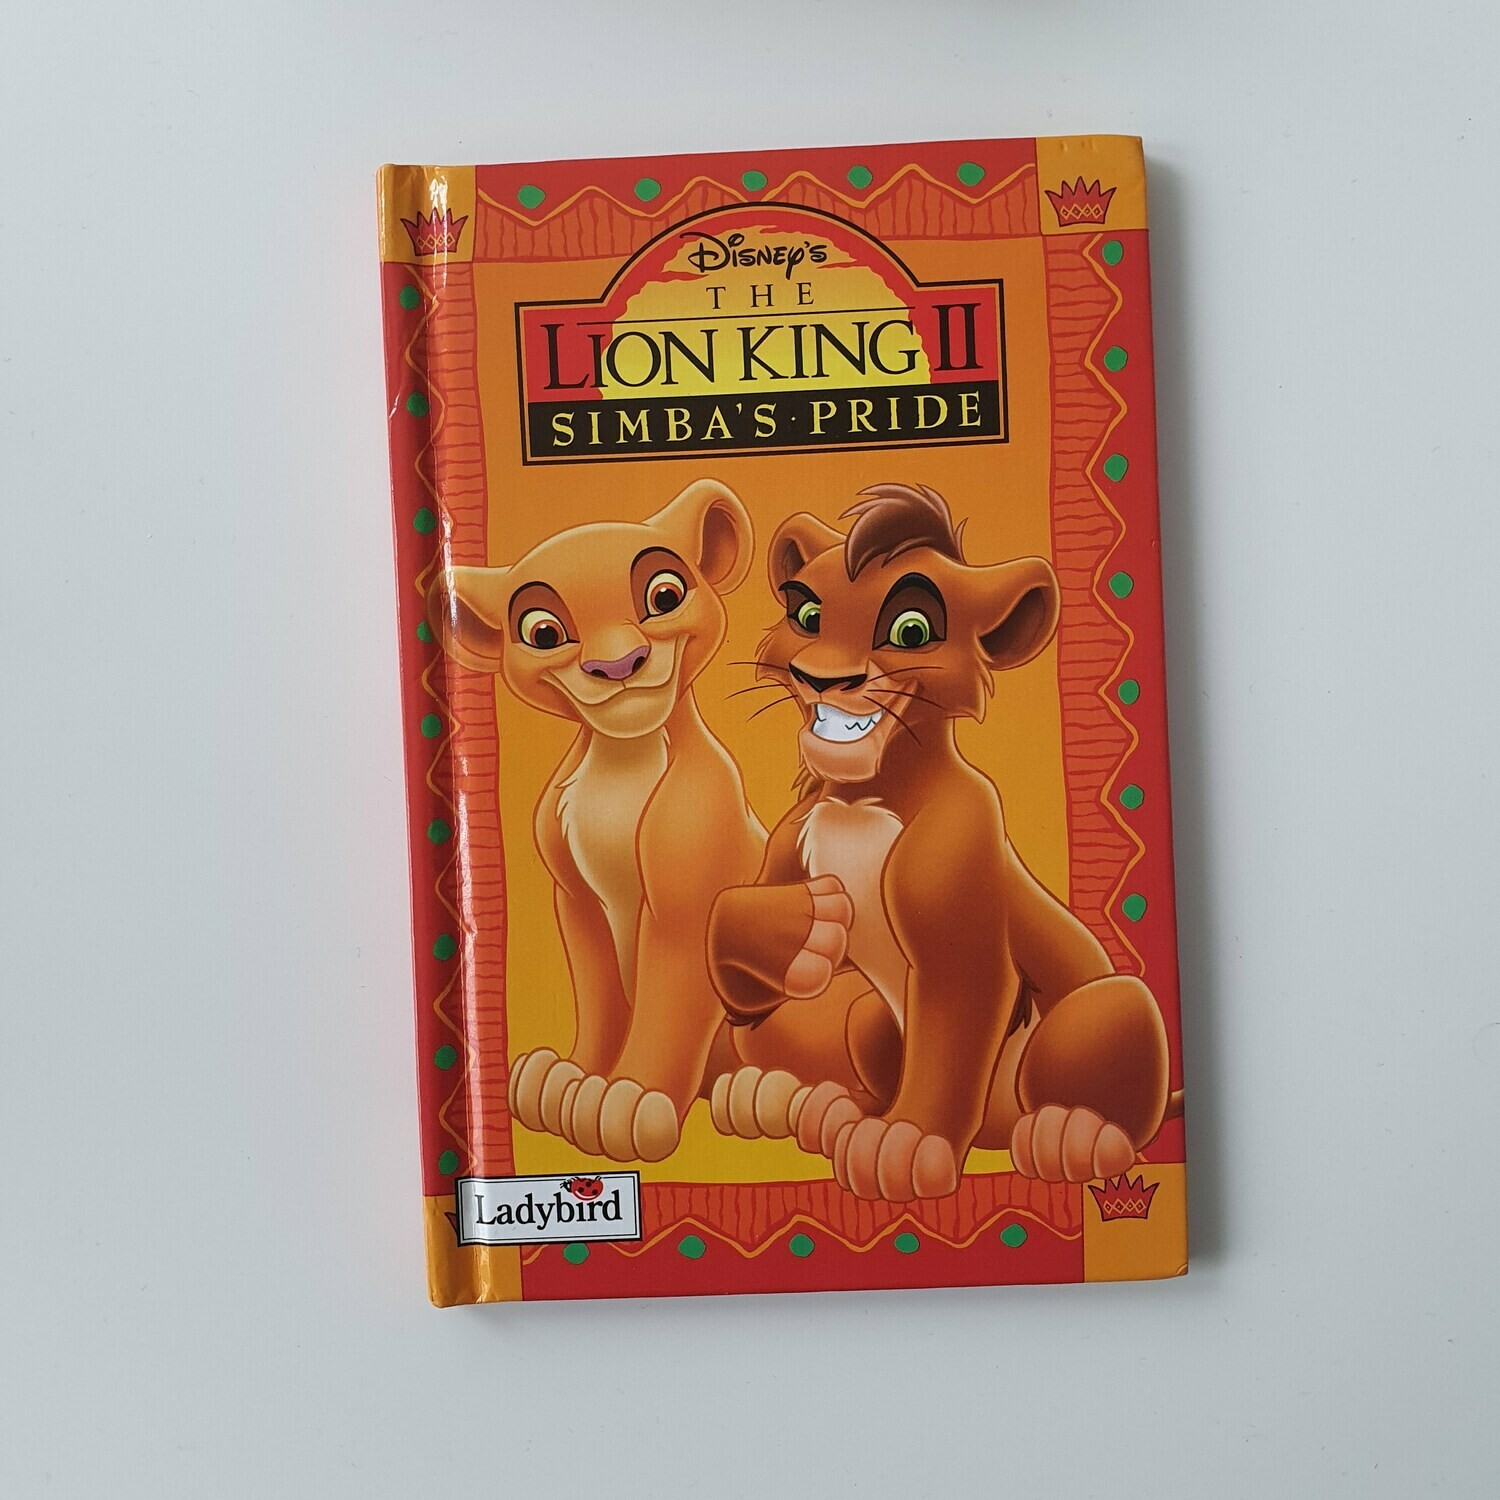 Lion King II Simbas Pride Notebook - Ladybird book